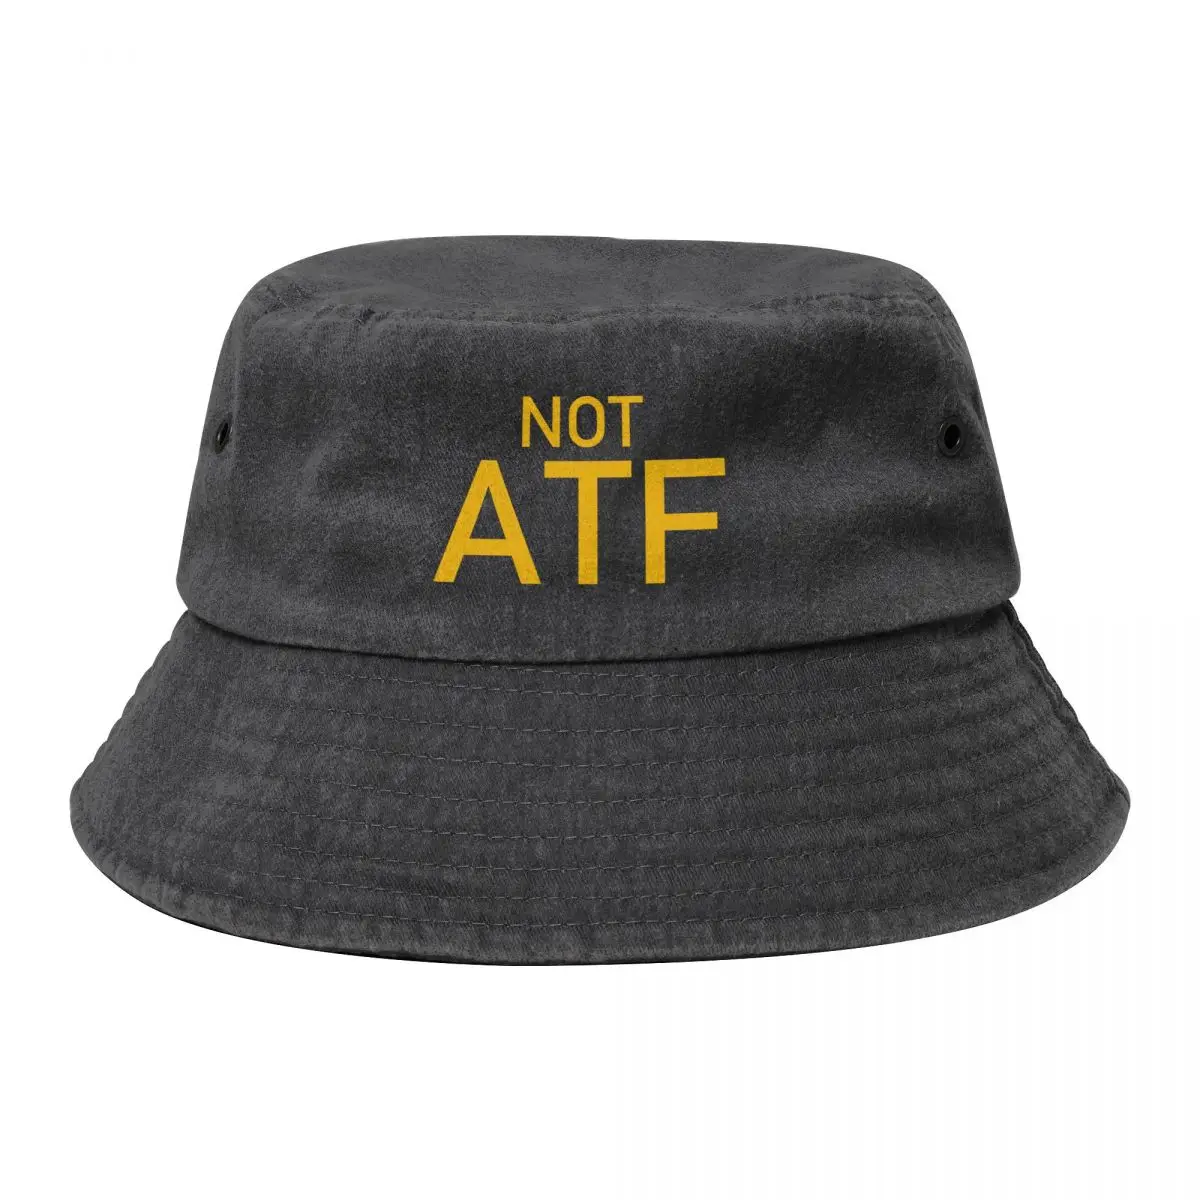 

Not ATF - Gun Meme, BATFE, Gun Rights Bucket Hat Golf Hat sun hat Ladies Men's